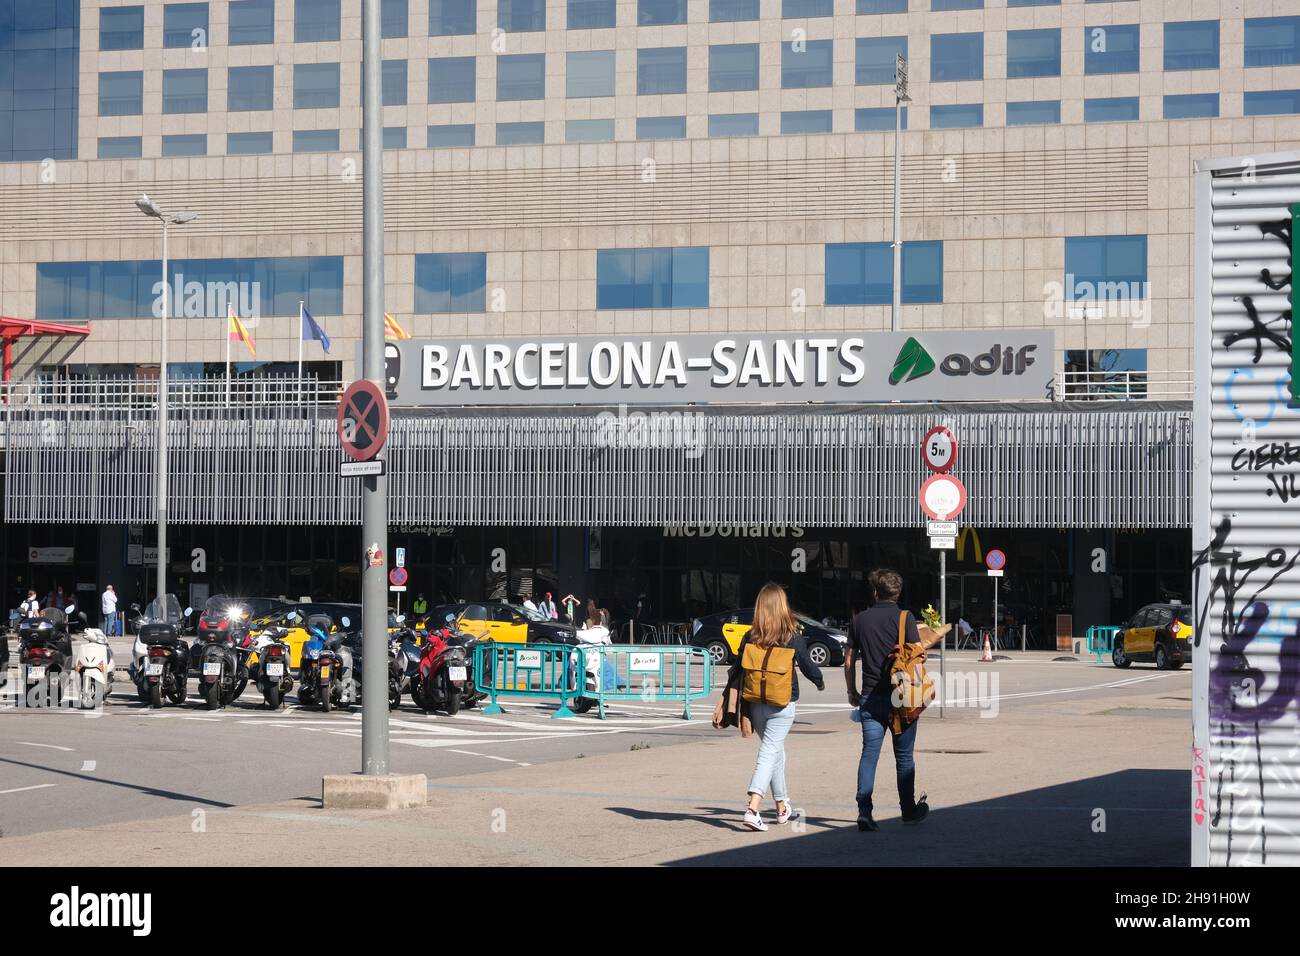 Barcelona, Spanien - 5. November 2021: Busbahnhof Barcelona-Sants mit adif-Logo, illustratives Editorial. Stockfoto